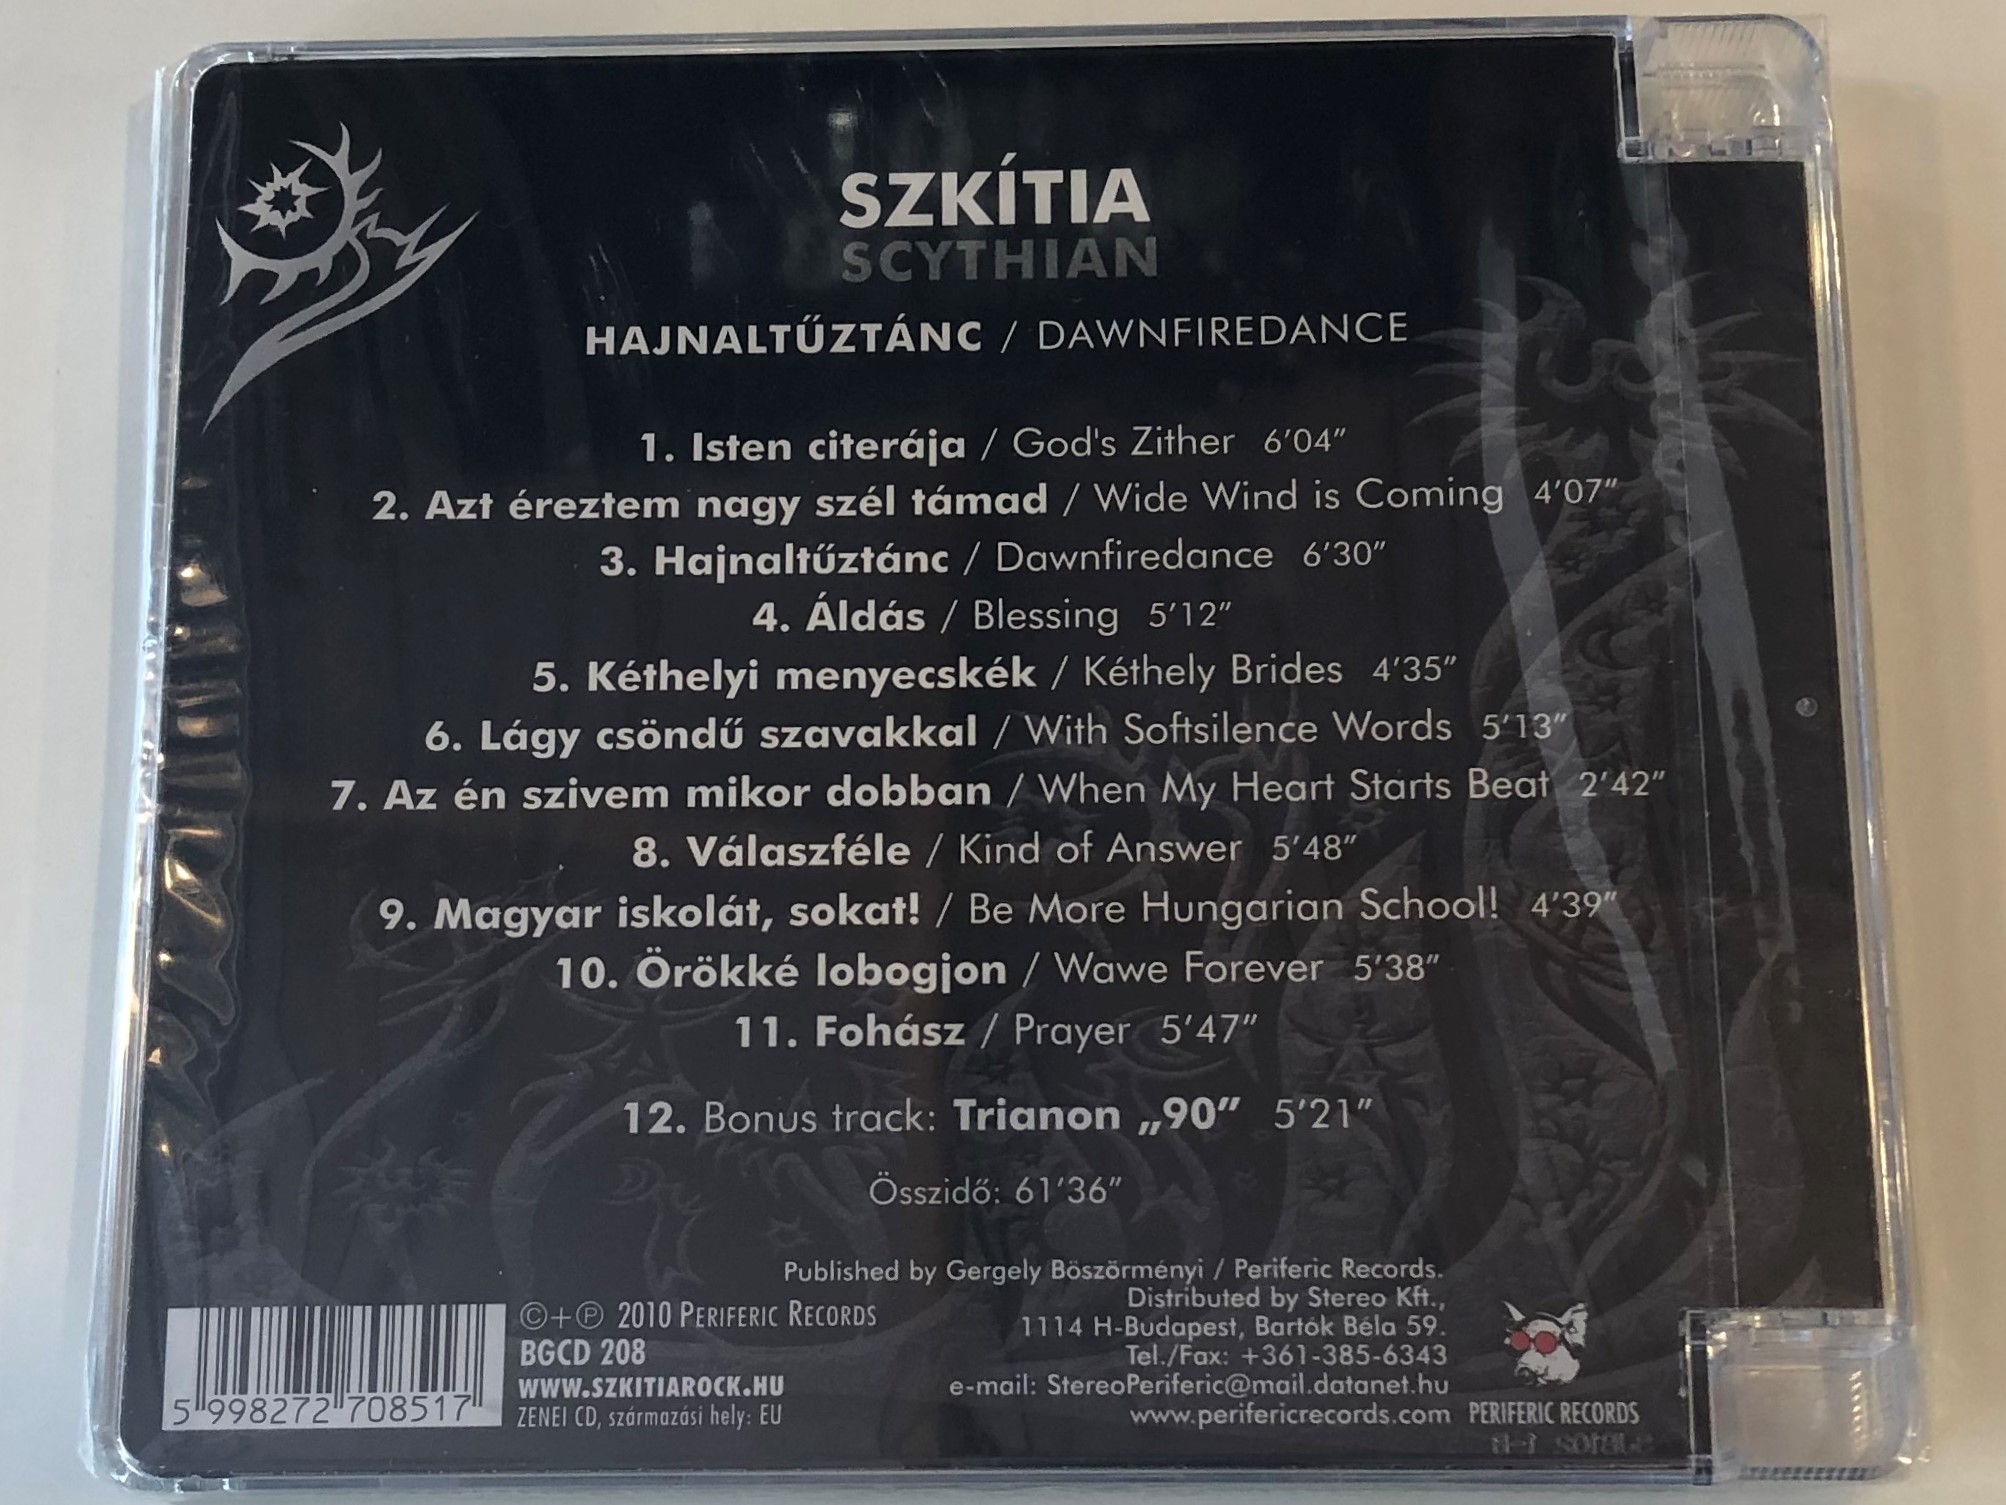 szk-tia-hajnalt-zt-nc-downfiredance-periferic-records-audio-cd-2010-bgcd-208-2-.jpg